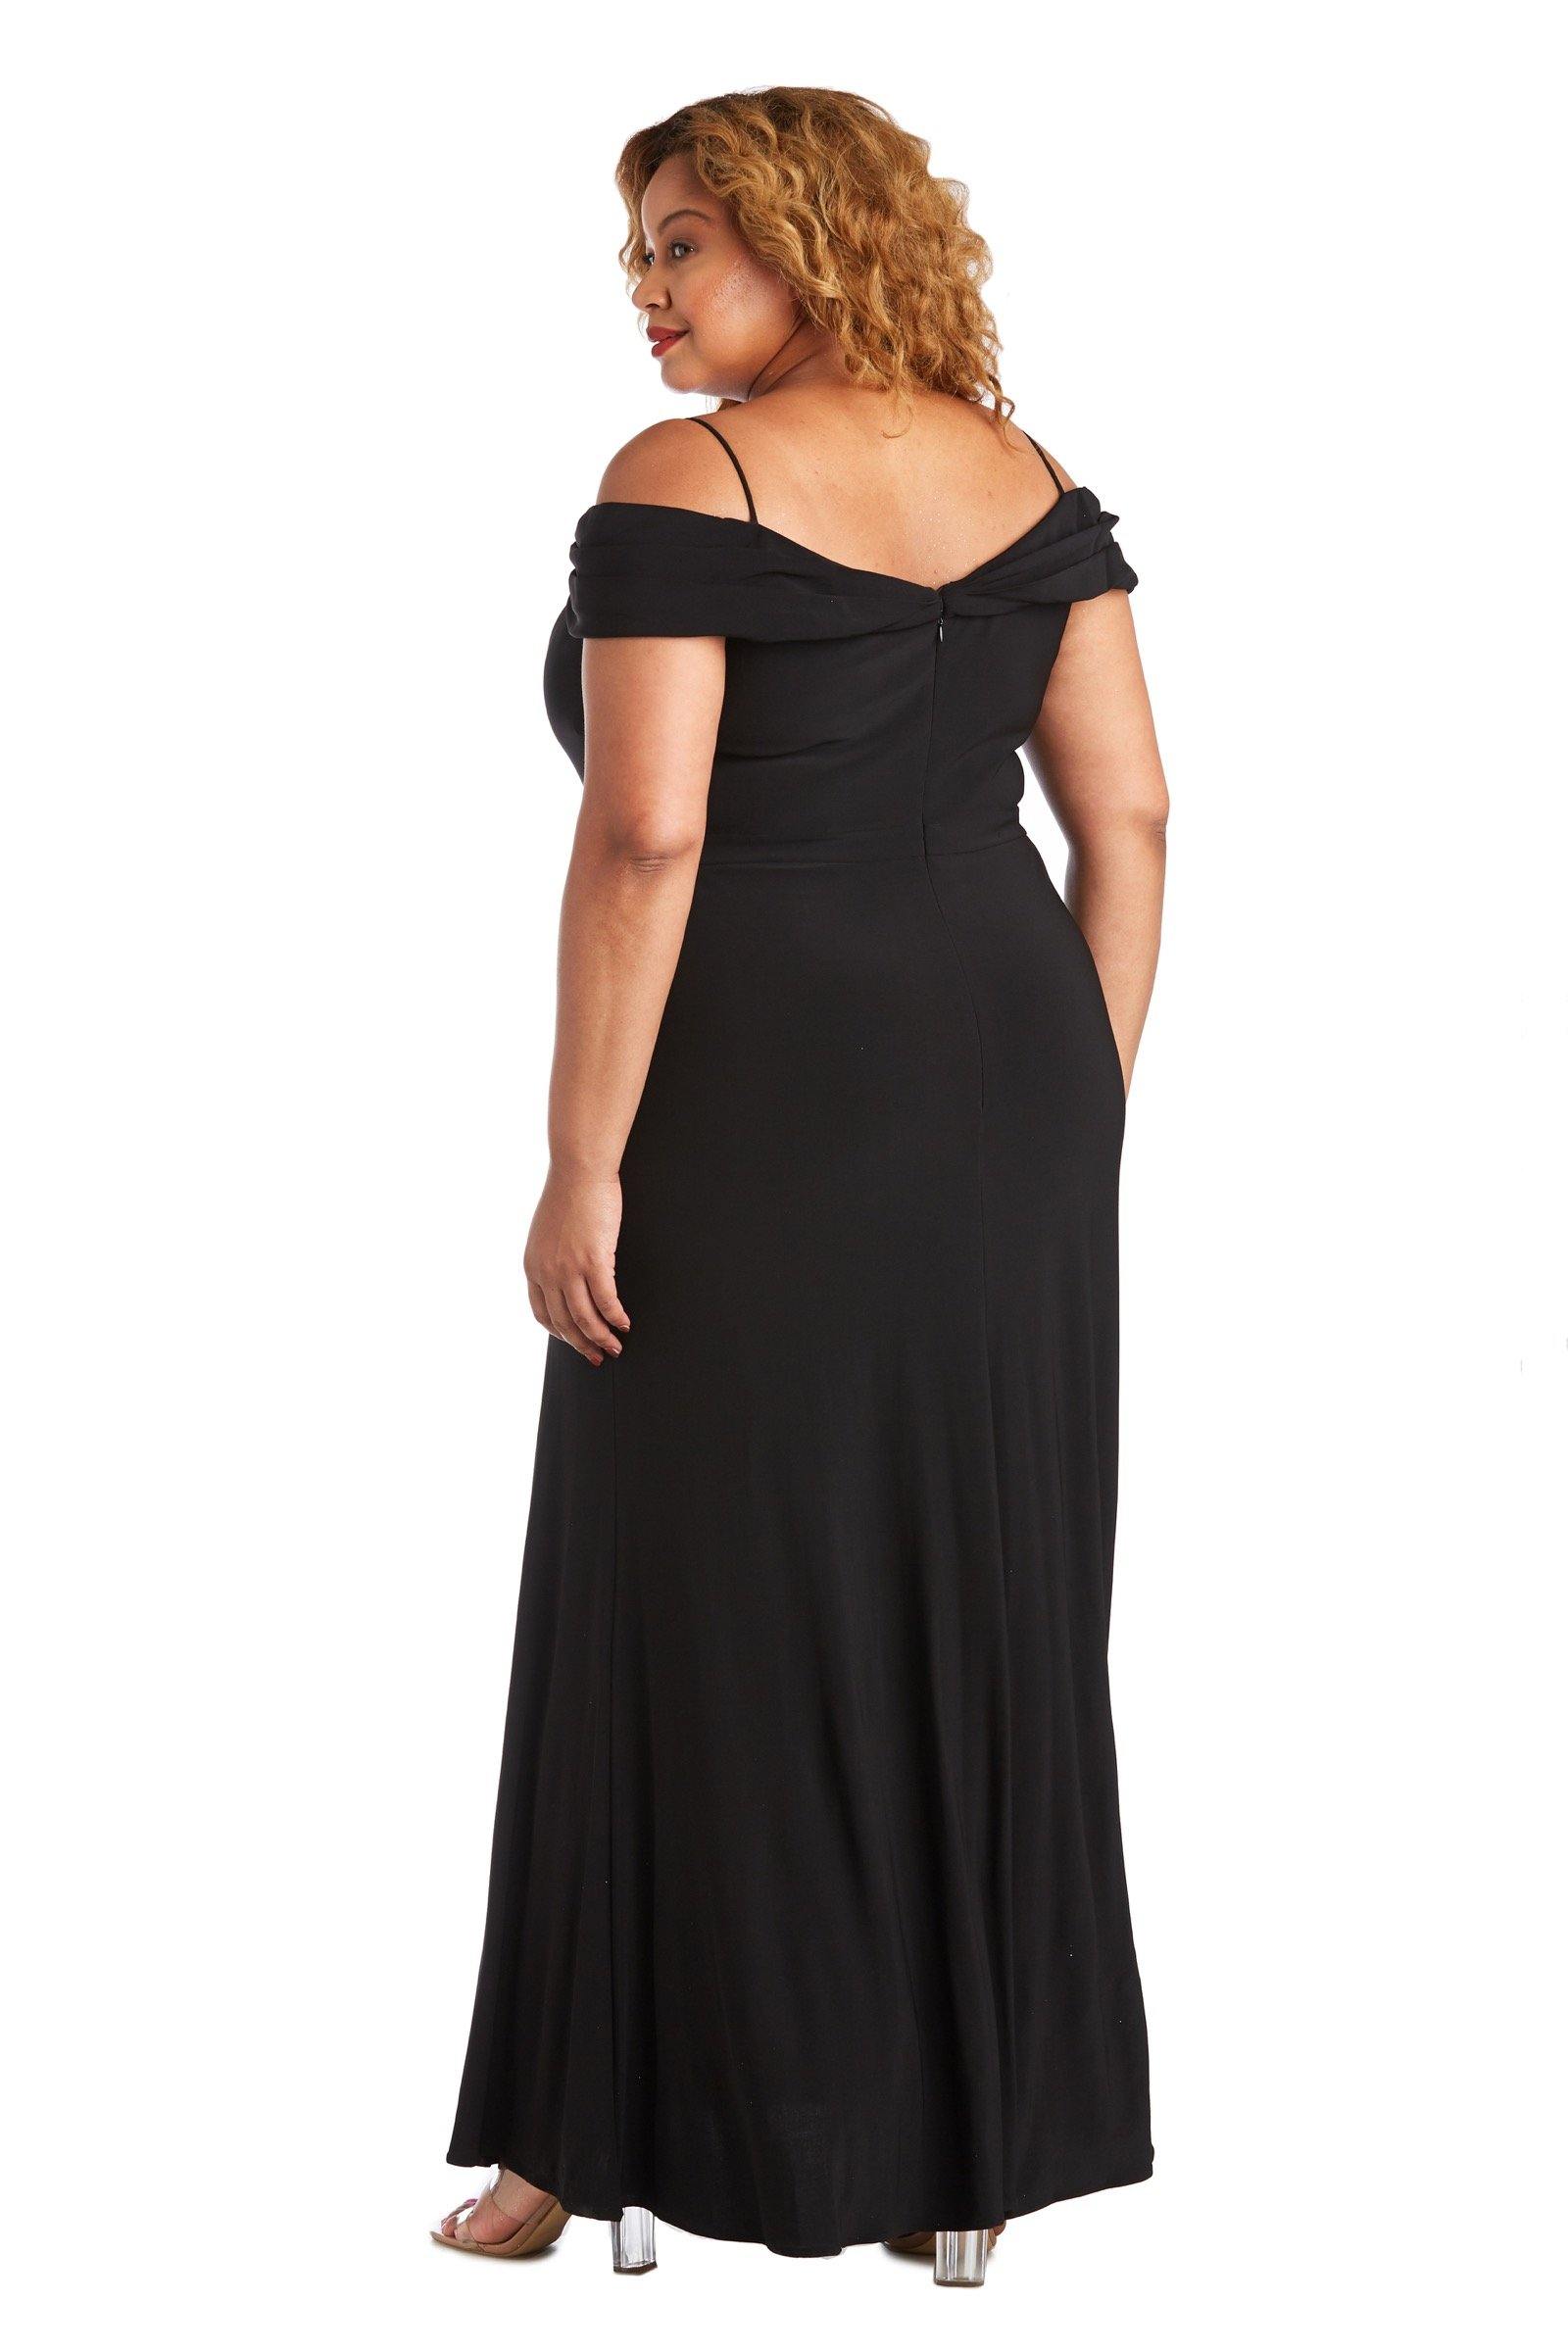 Morgan & Co 12343WMM Long Plus Size Evening Dress | The Dress Outlet